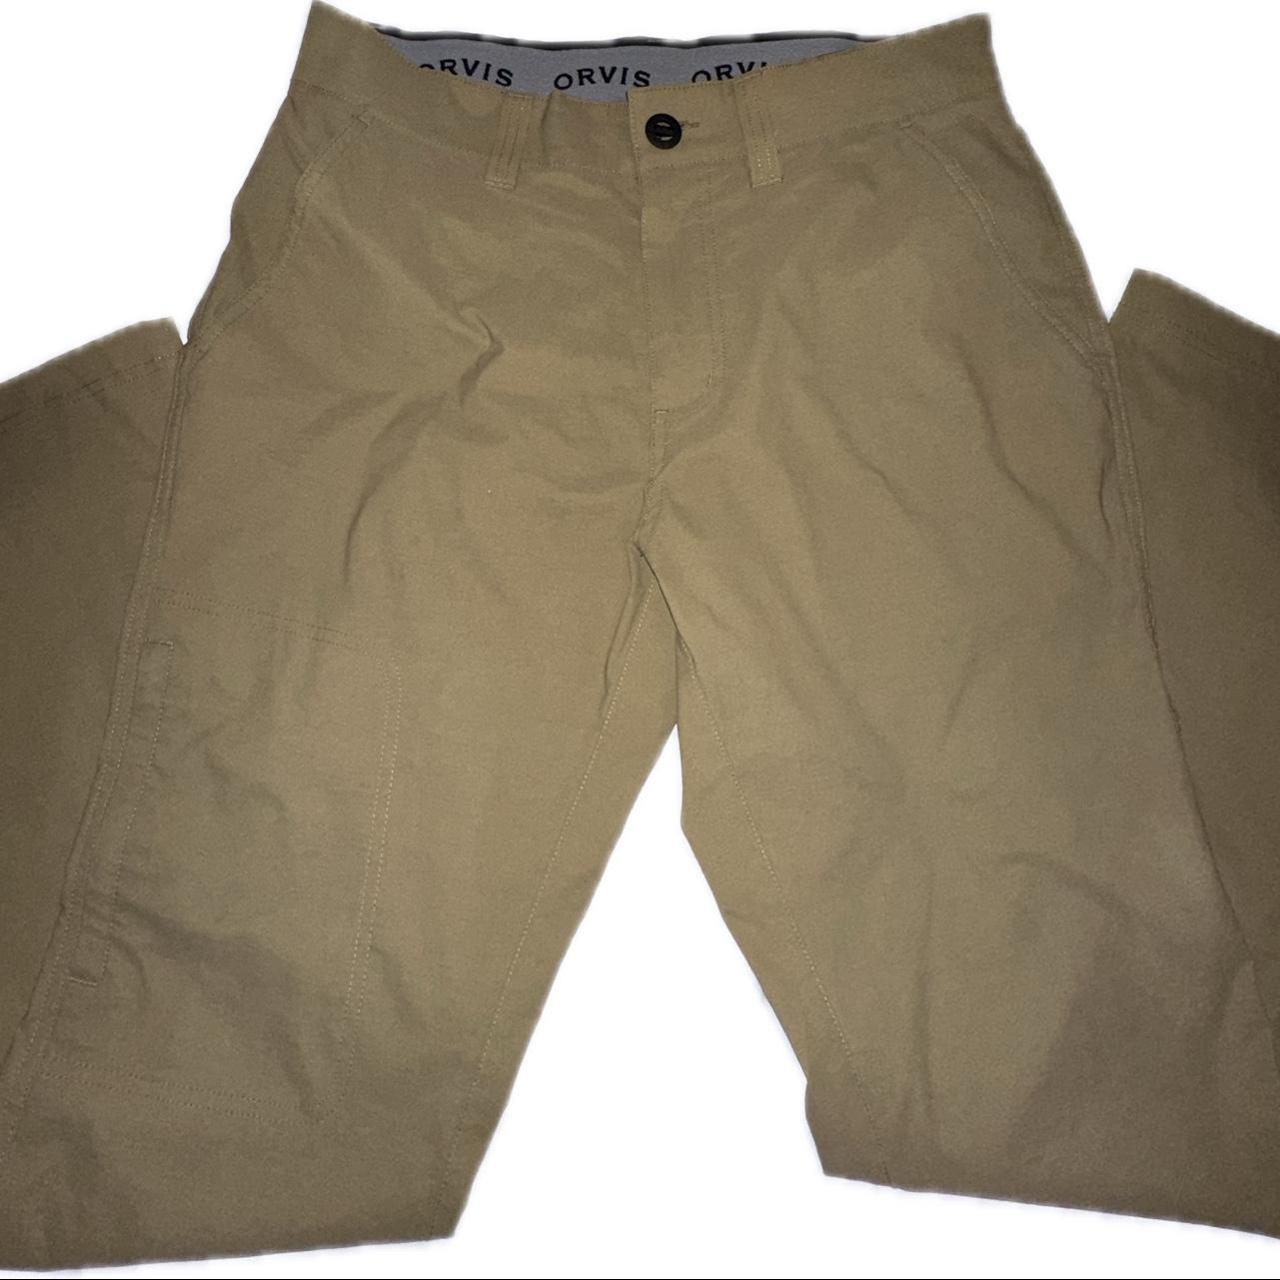 Orvis Fly fishing pants Slick lightweight material - Depop